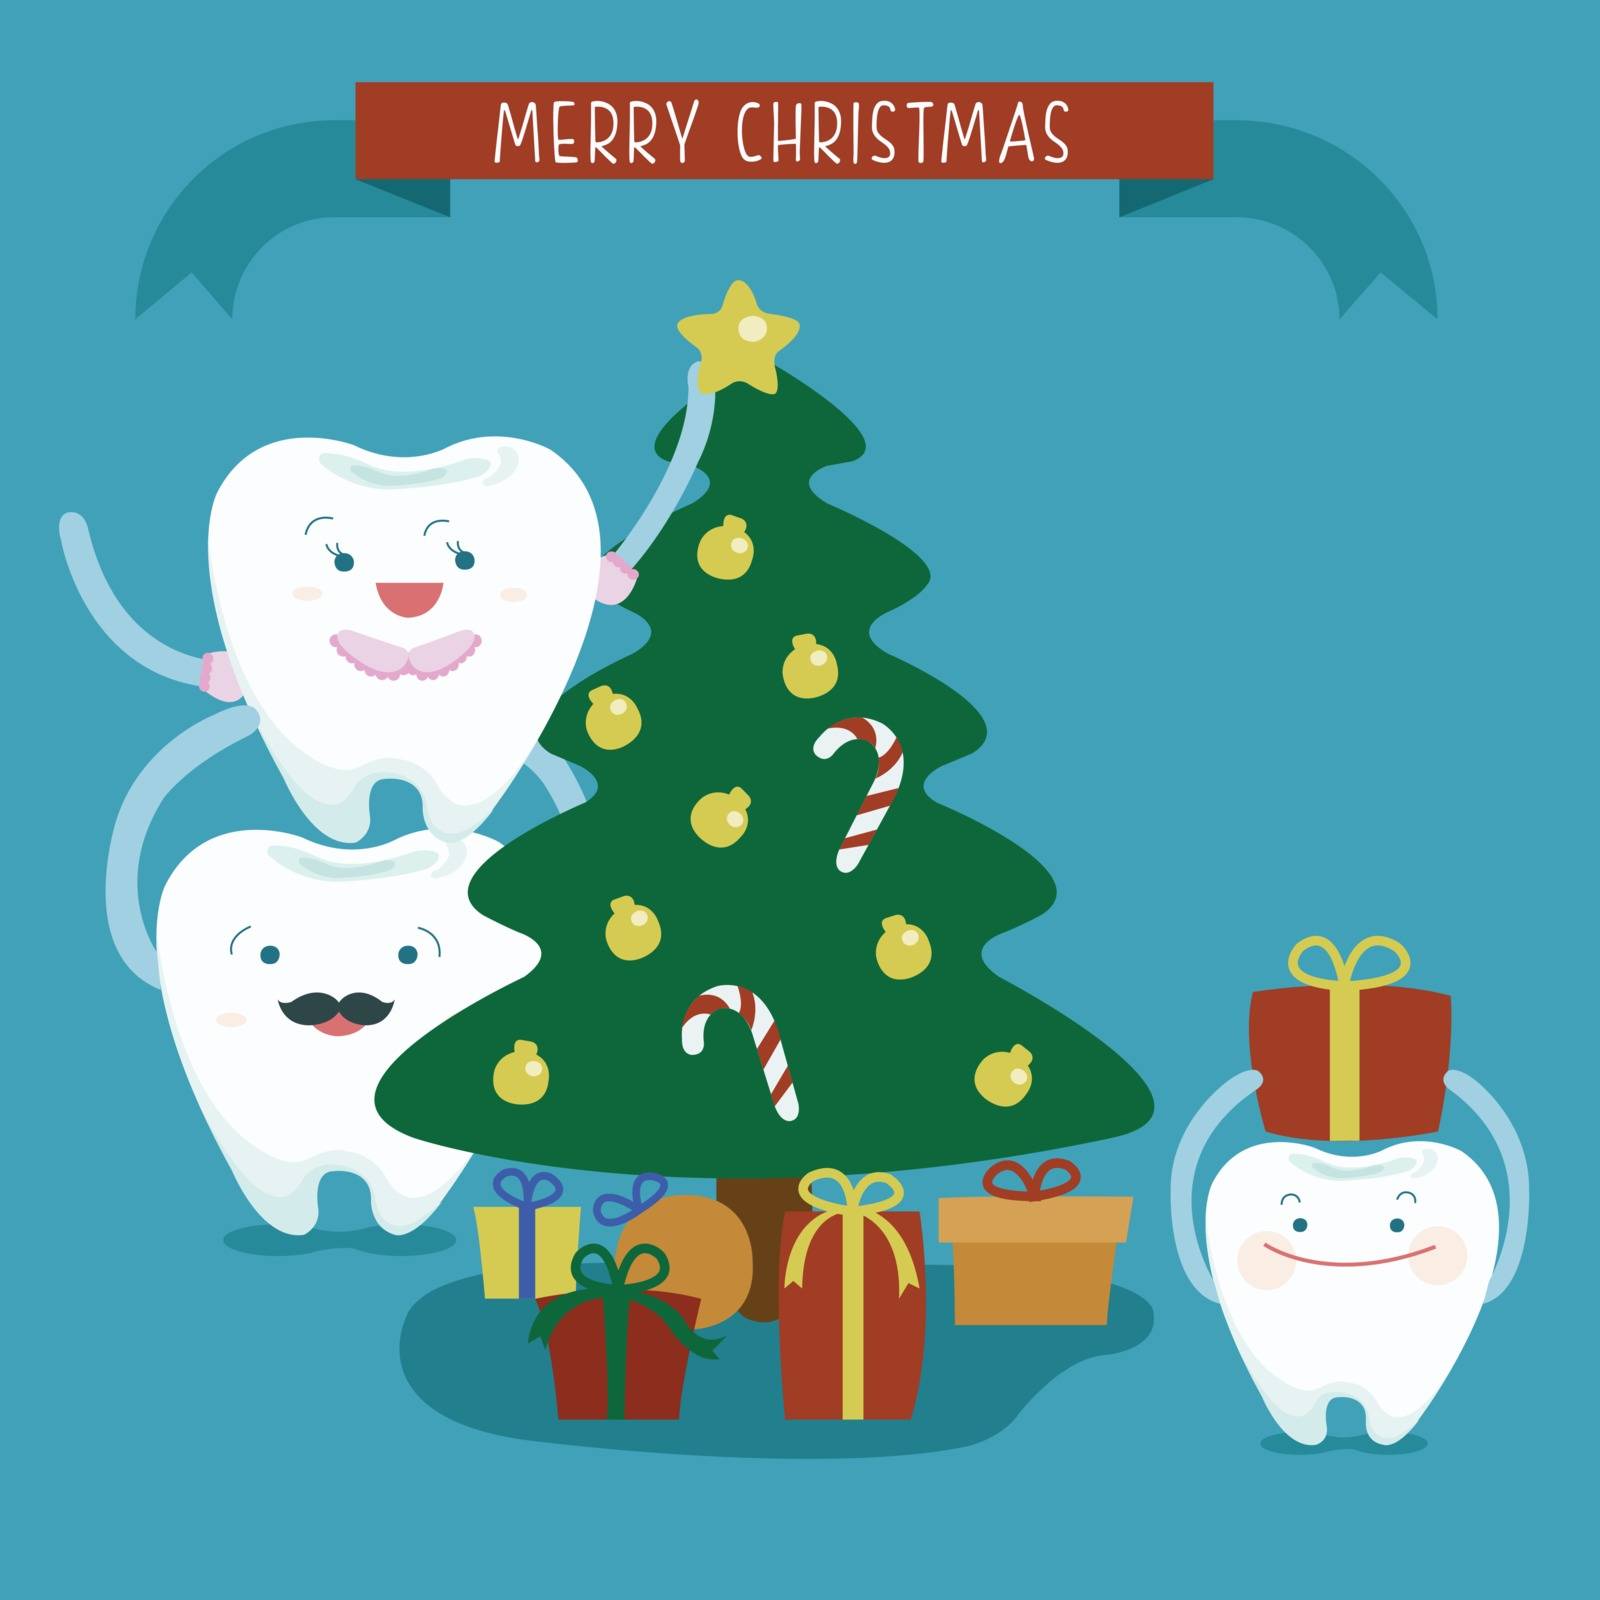 Merry Christmas family dental